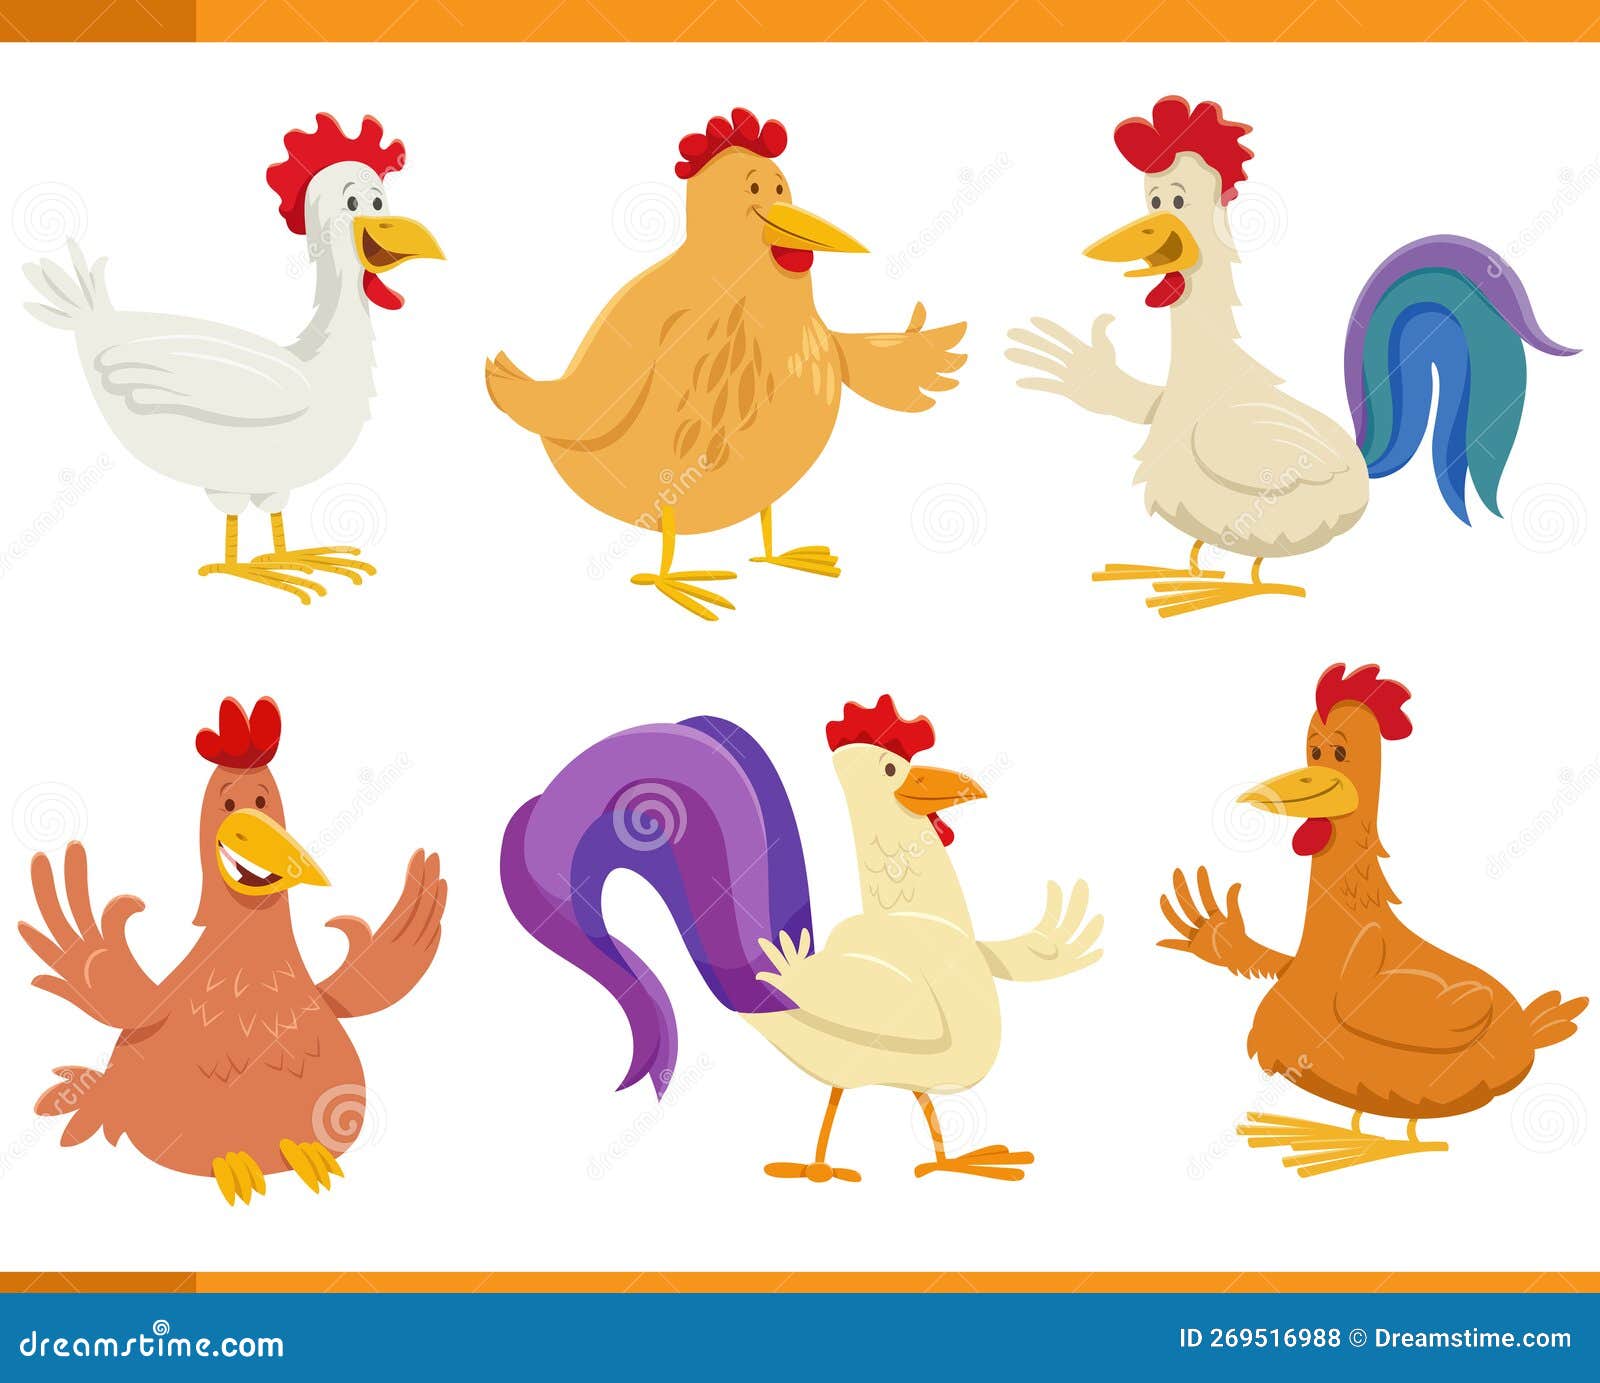 Funny Chickens Collection Cartoon Vector | CartoonDealer.com #51905113